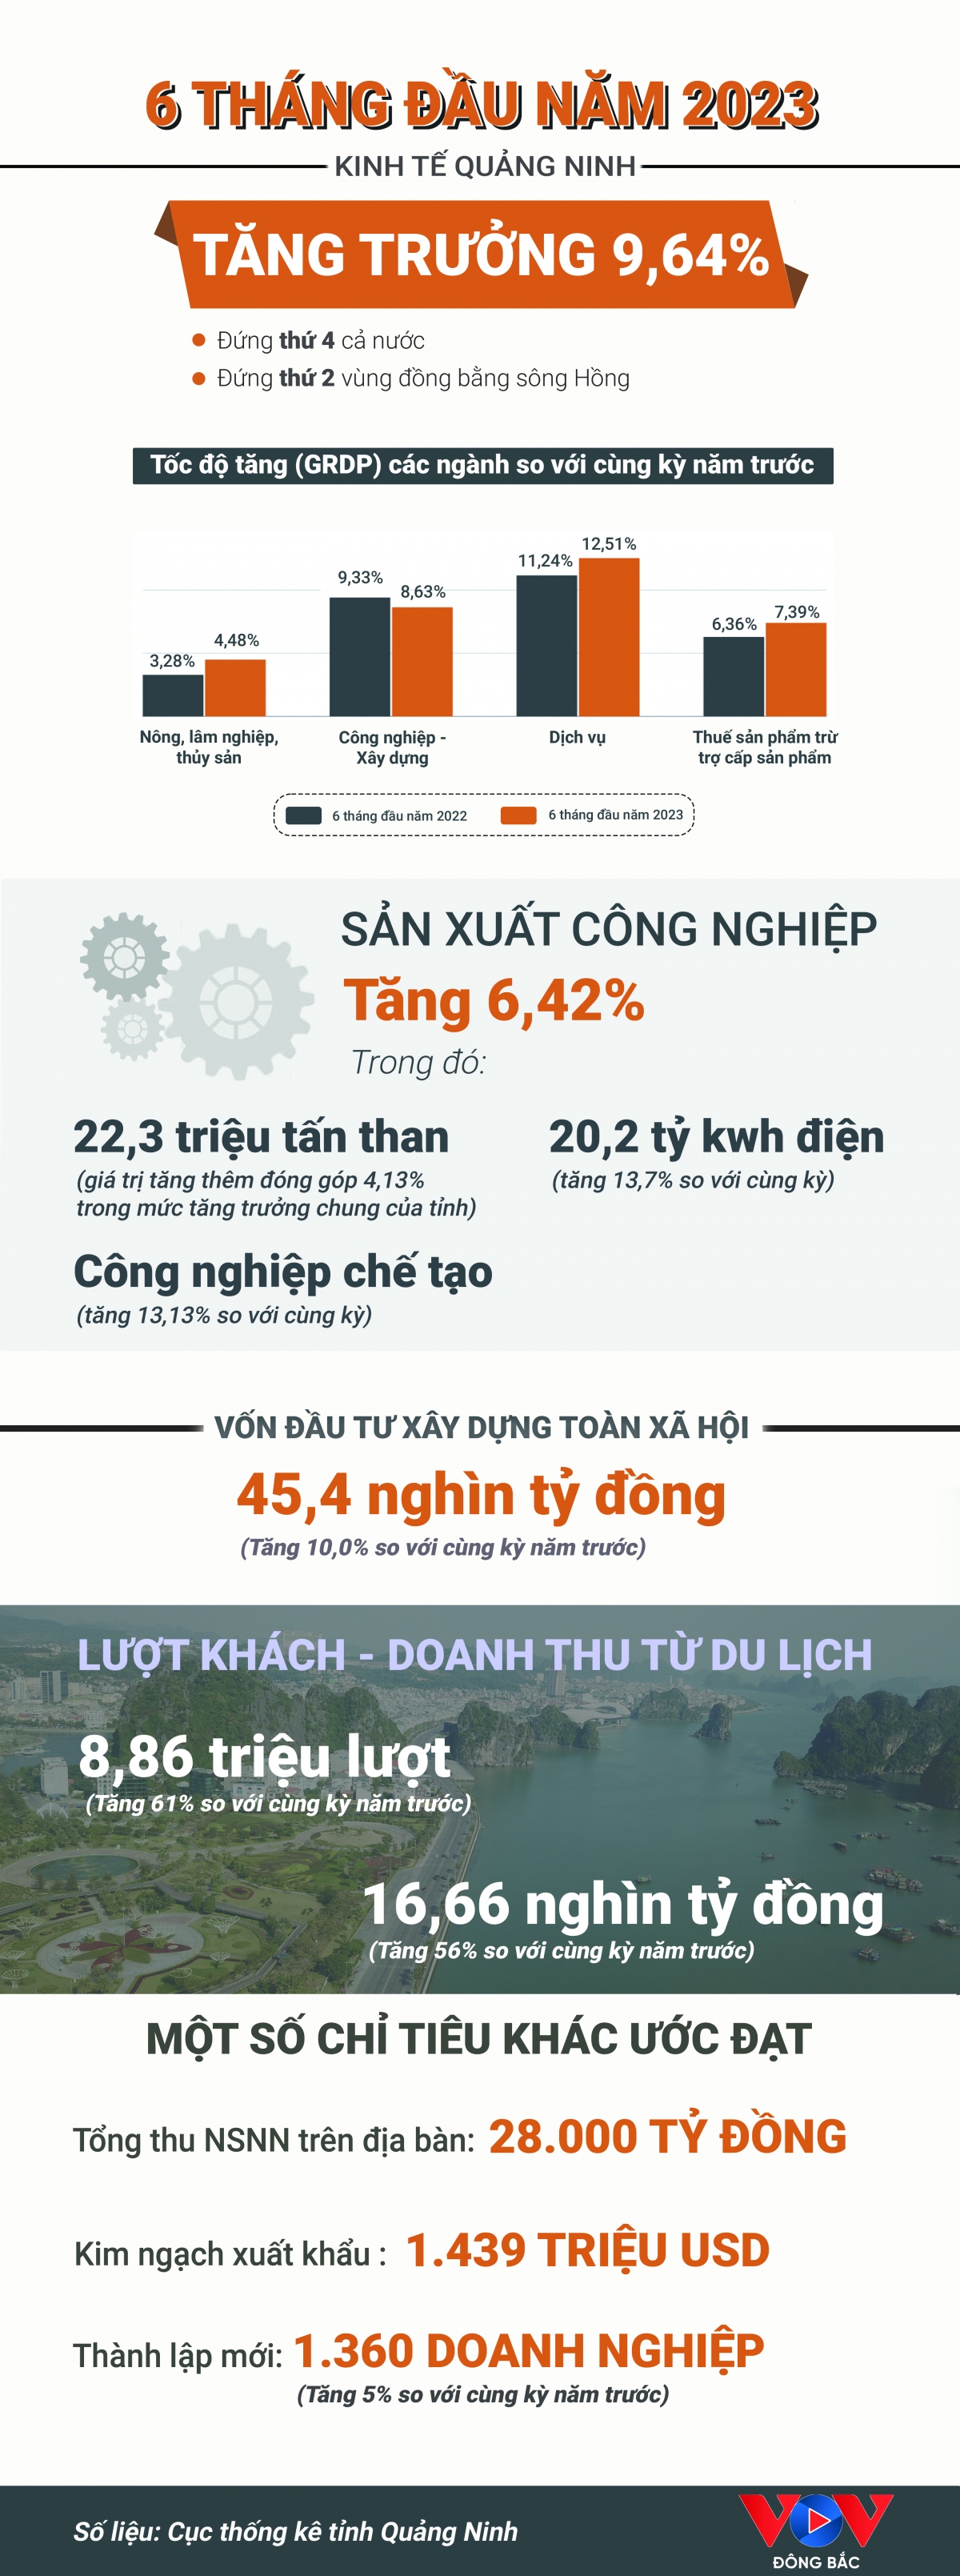 infographic_6_thang_dau_nam_qn_sua_0.jpg